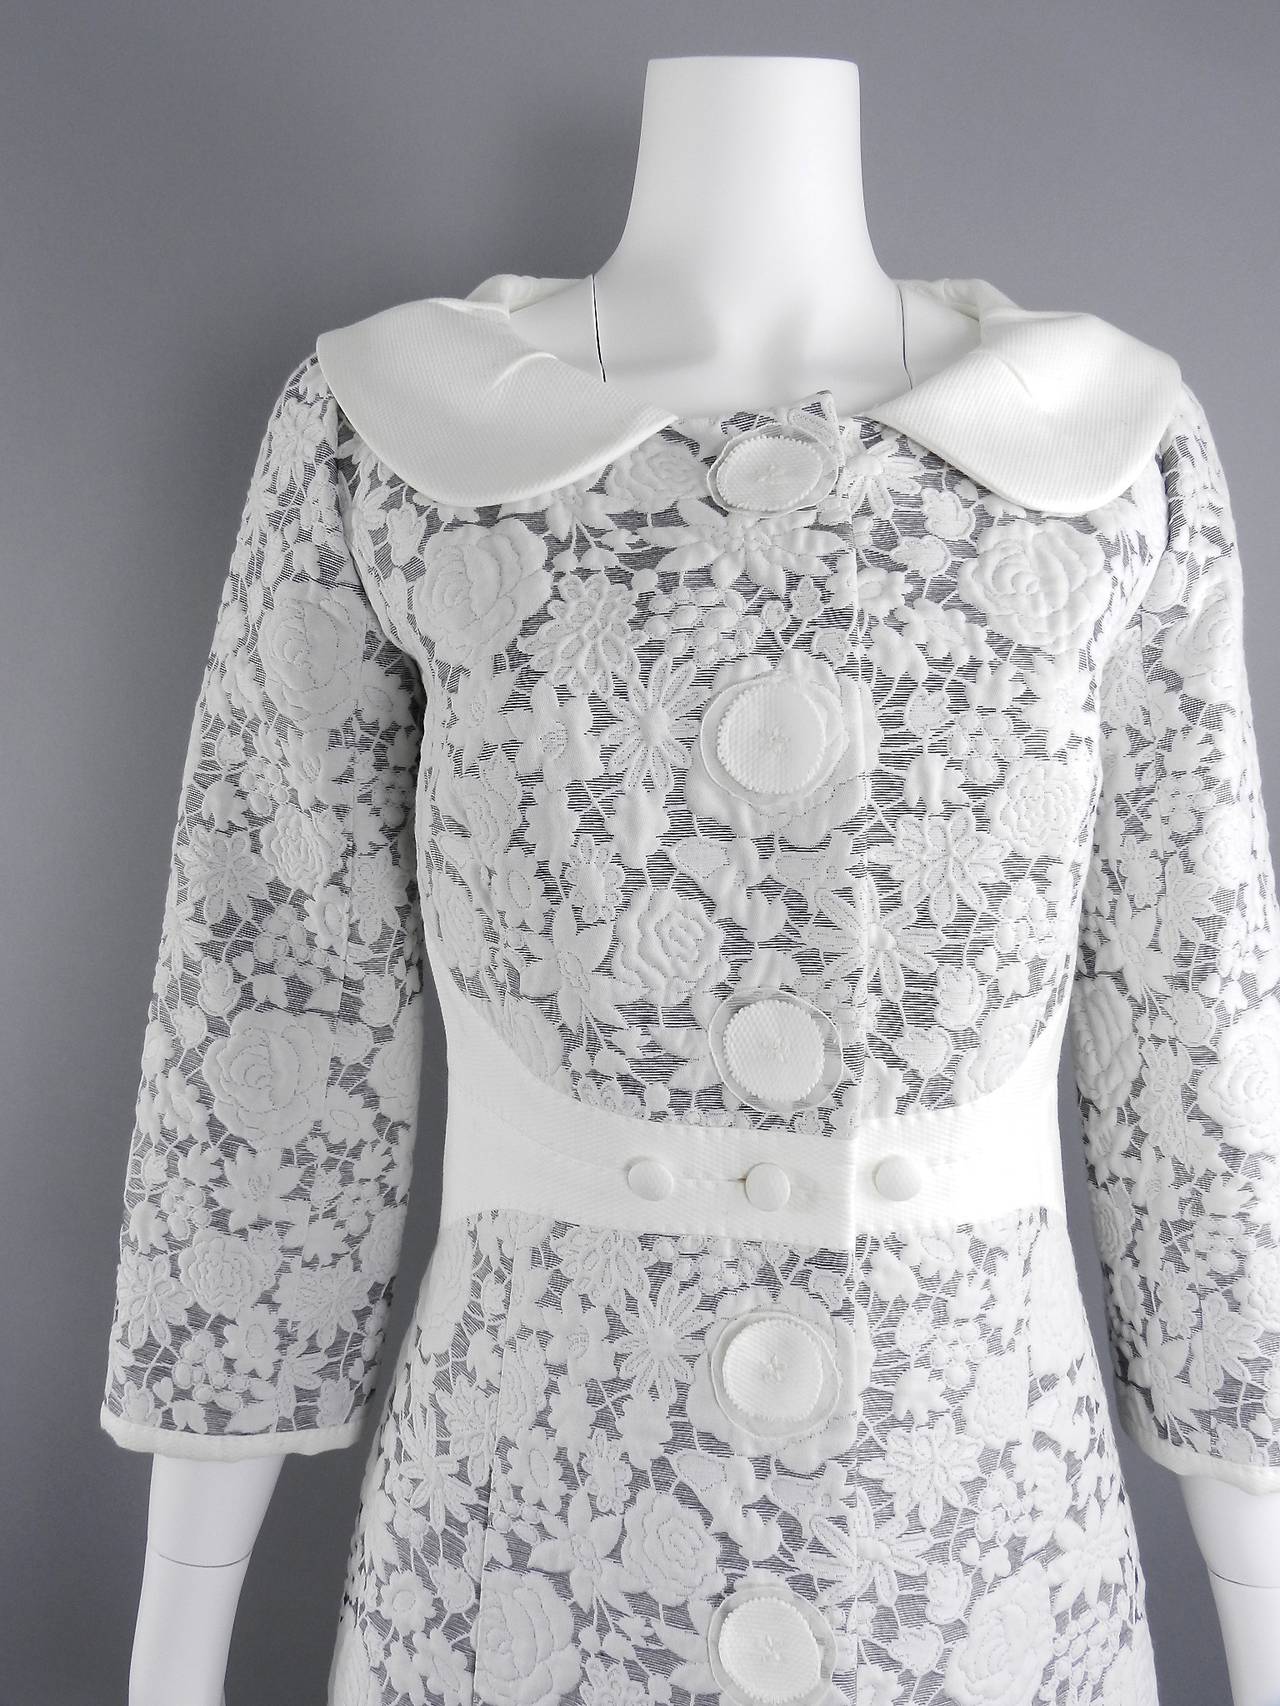 Louis Vuitton White Cotton Floral Jacket at 1stdibs